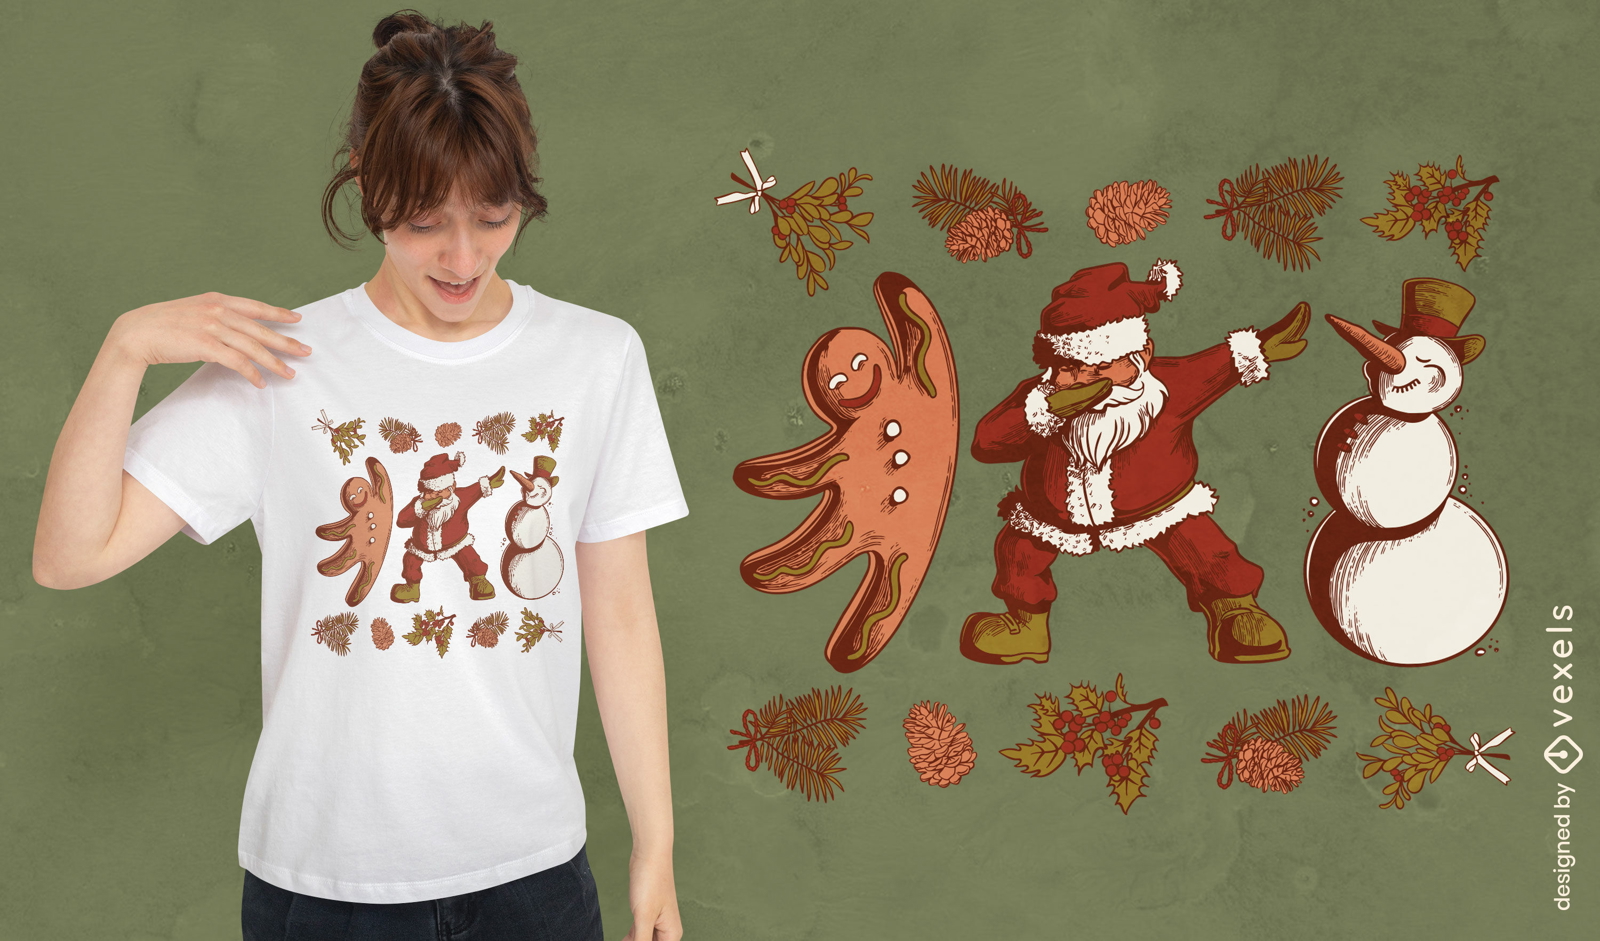 Vintage Christmas characters t-shirt design